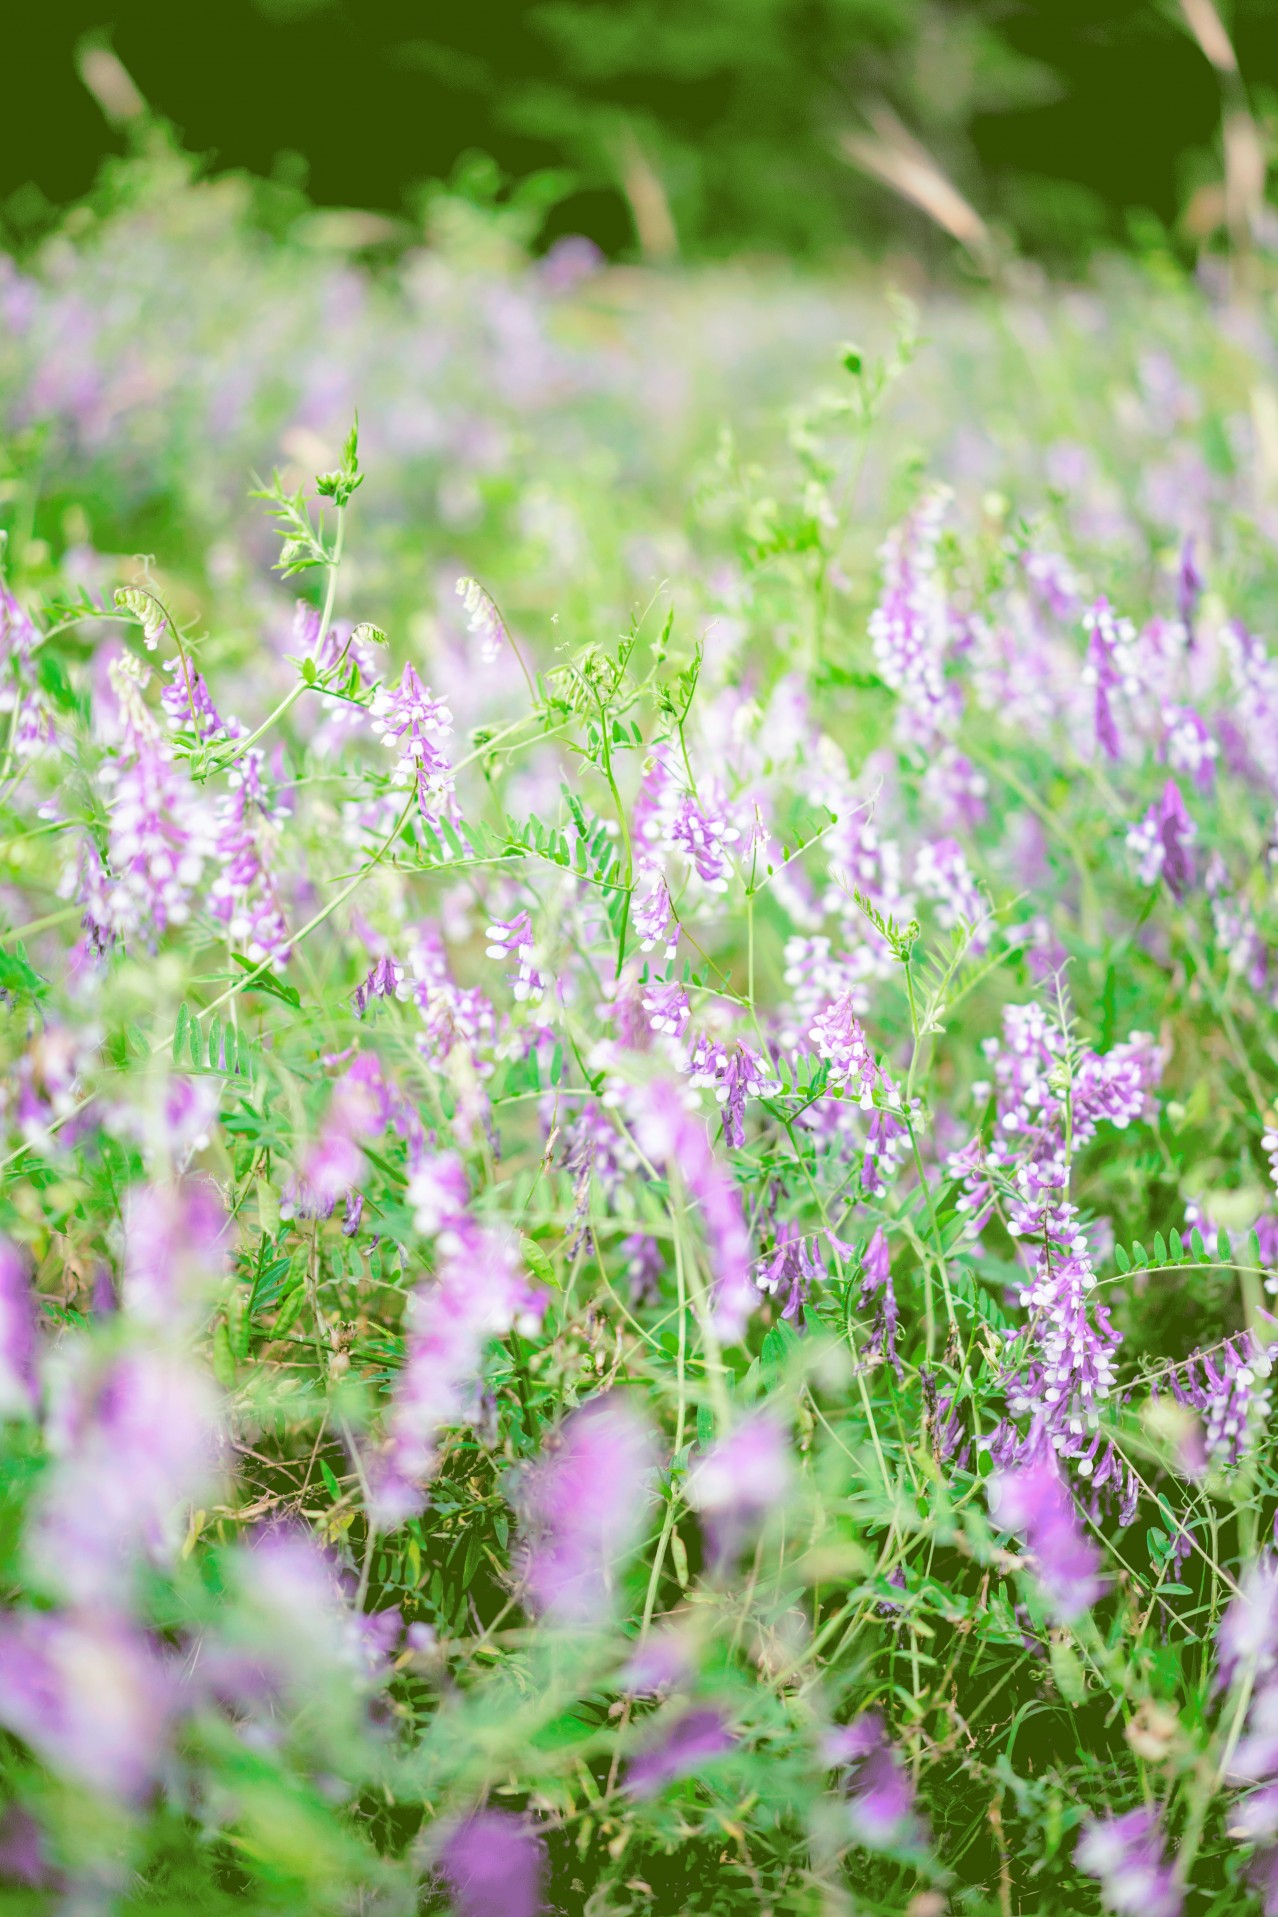 Grass with beautiful purple flowers